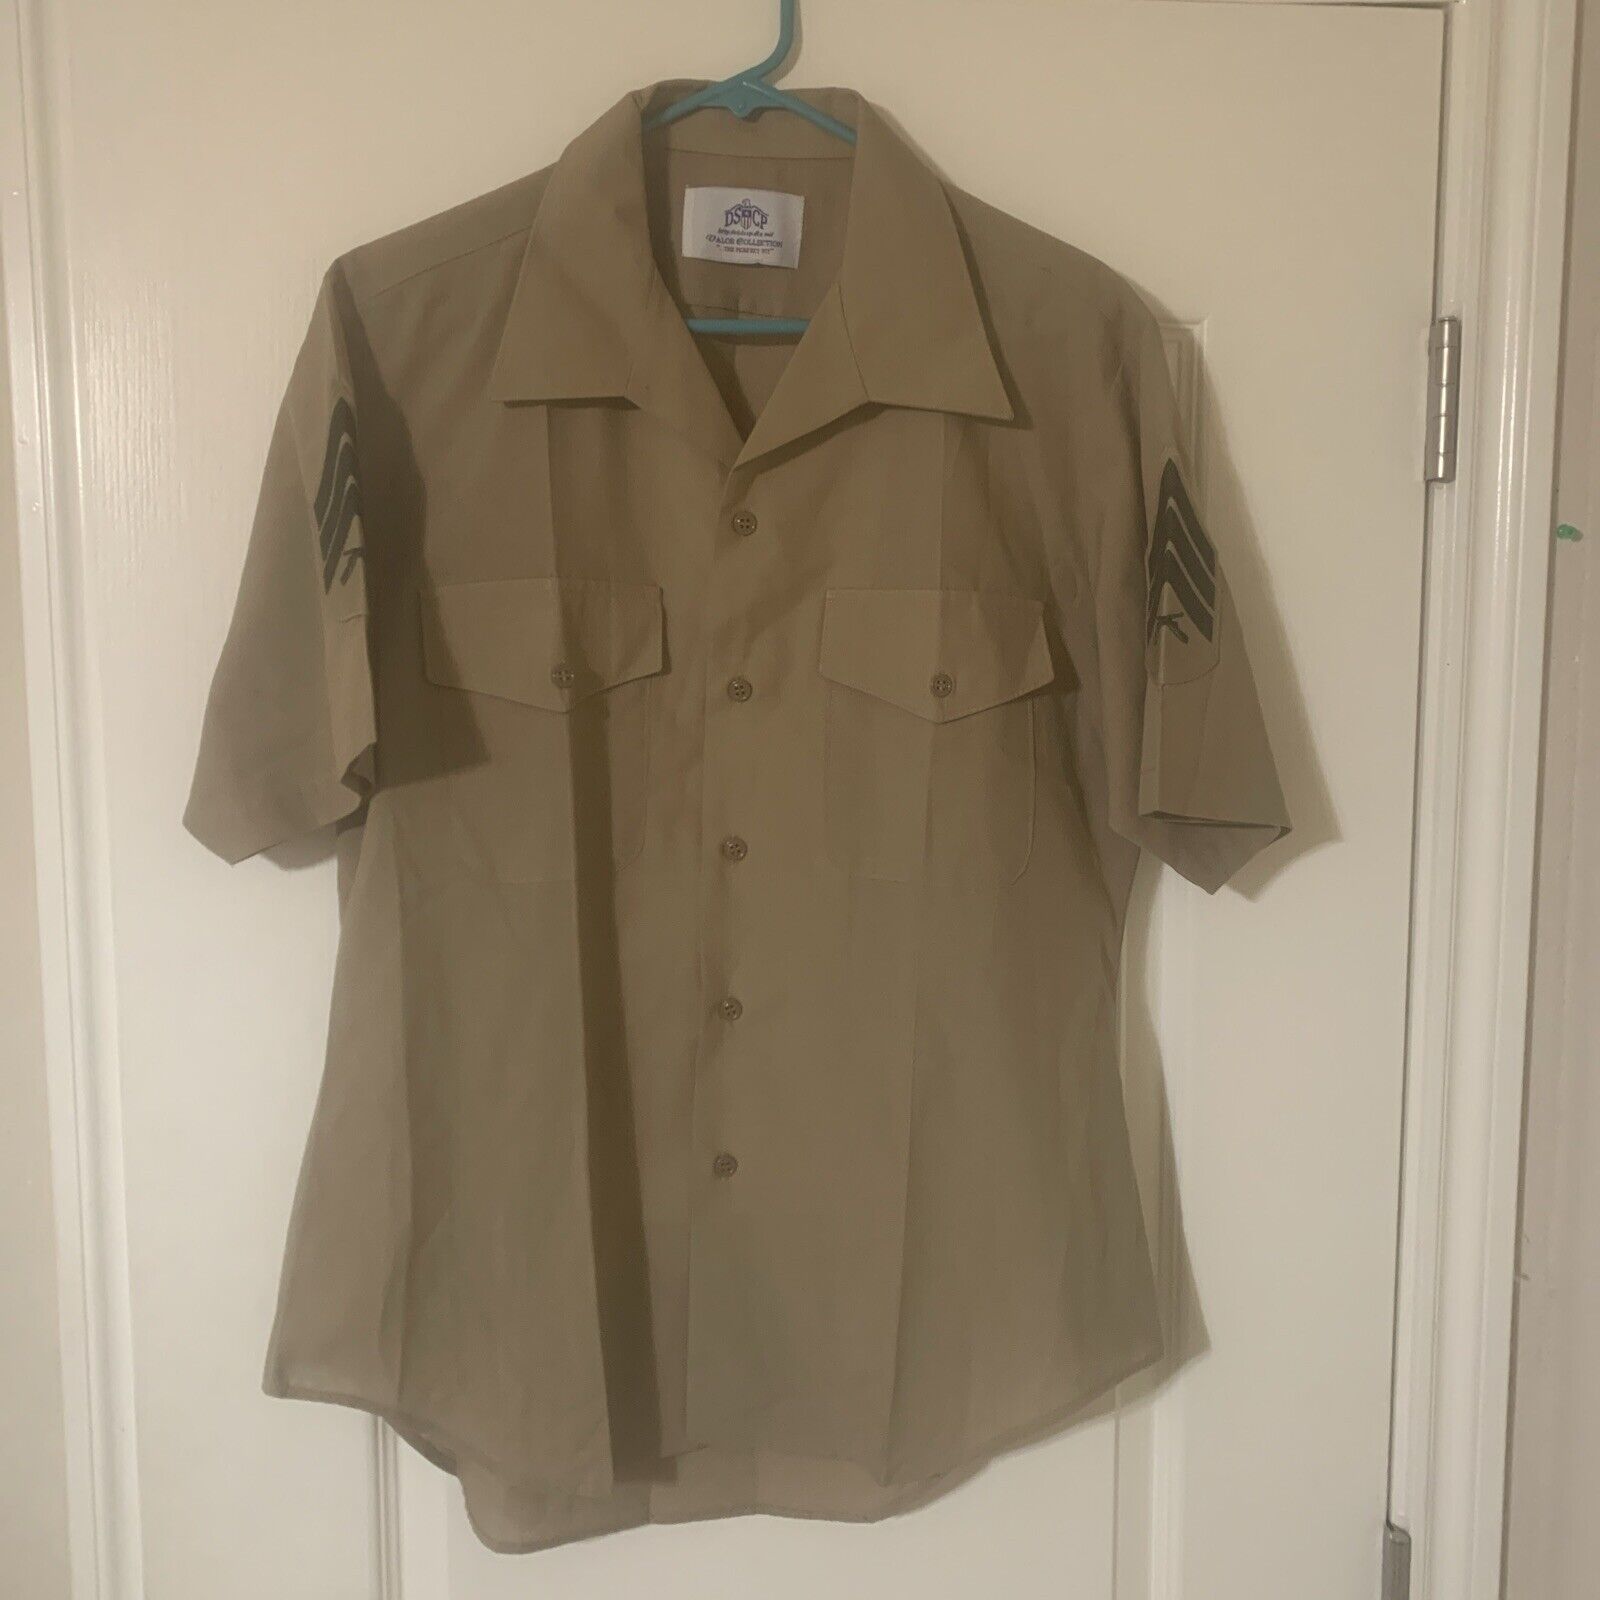 DSCP Valor Marine USMC Button Up Shirt Military Khaki Short Sleeve Sz 16